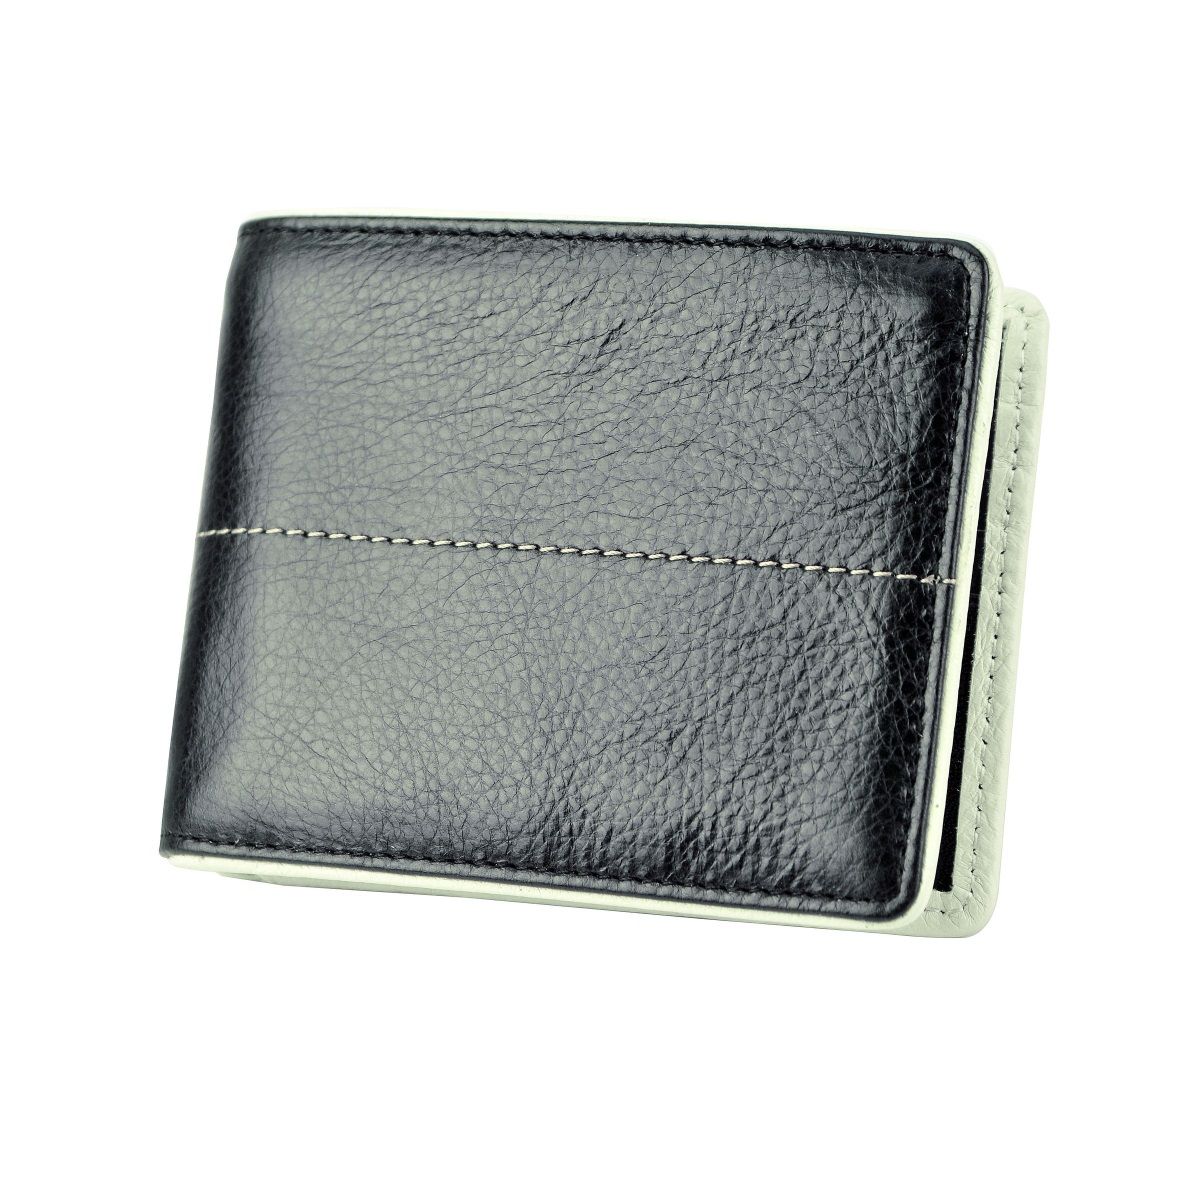 J.FOLD Stitched Panel Leather Wallet - Black